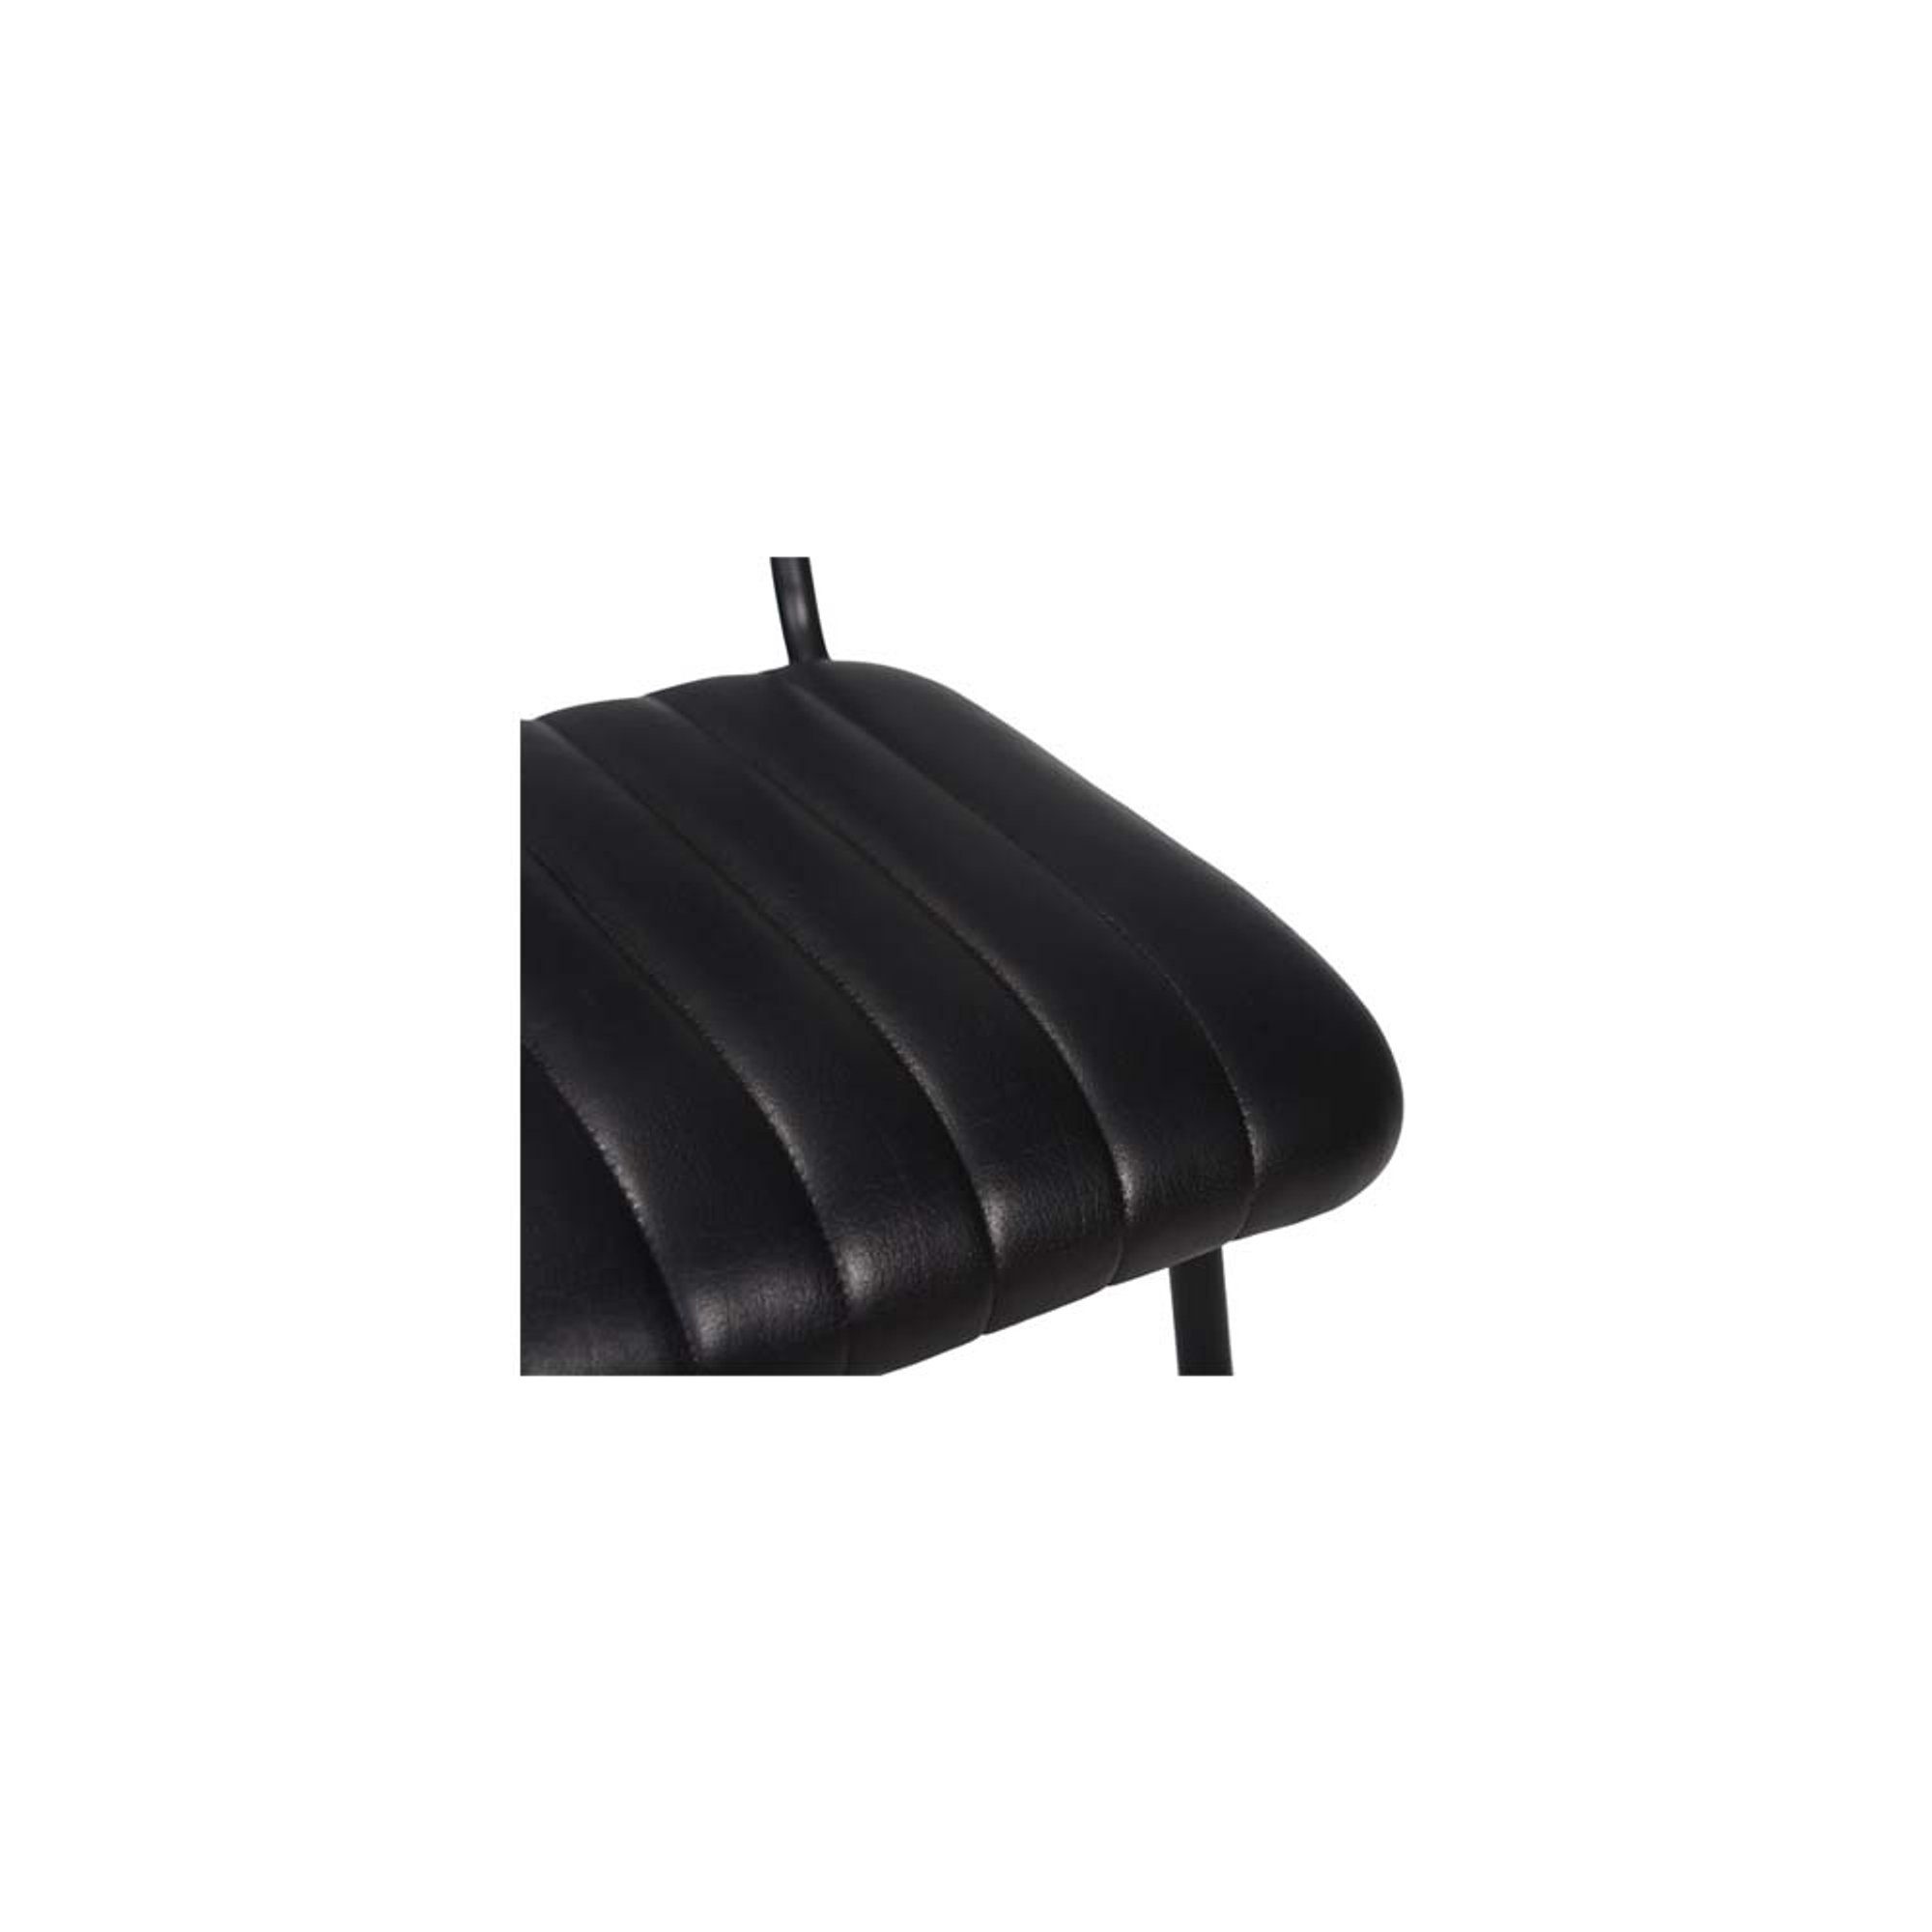 Stuhl I Black 2 Pc Catchers Stuhl Mugello Chair Leather